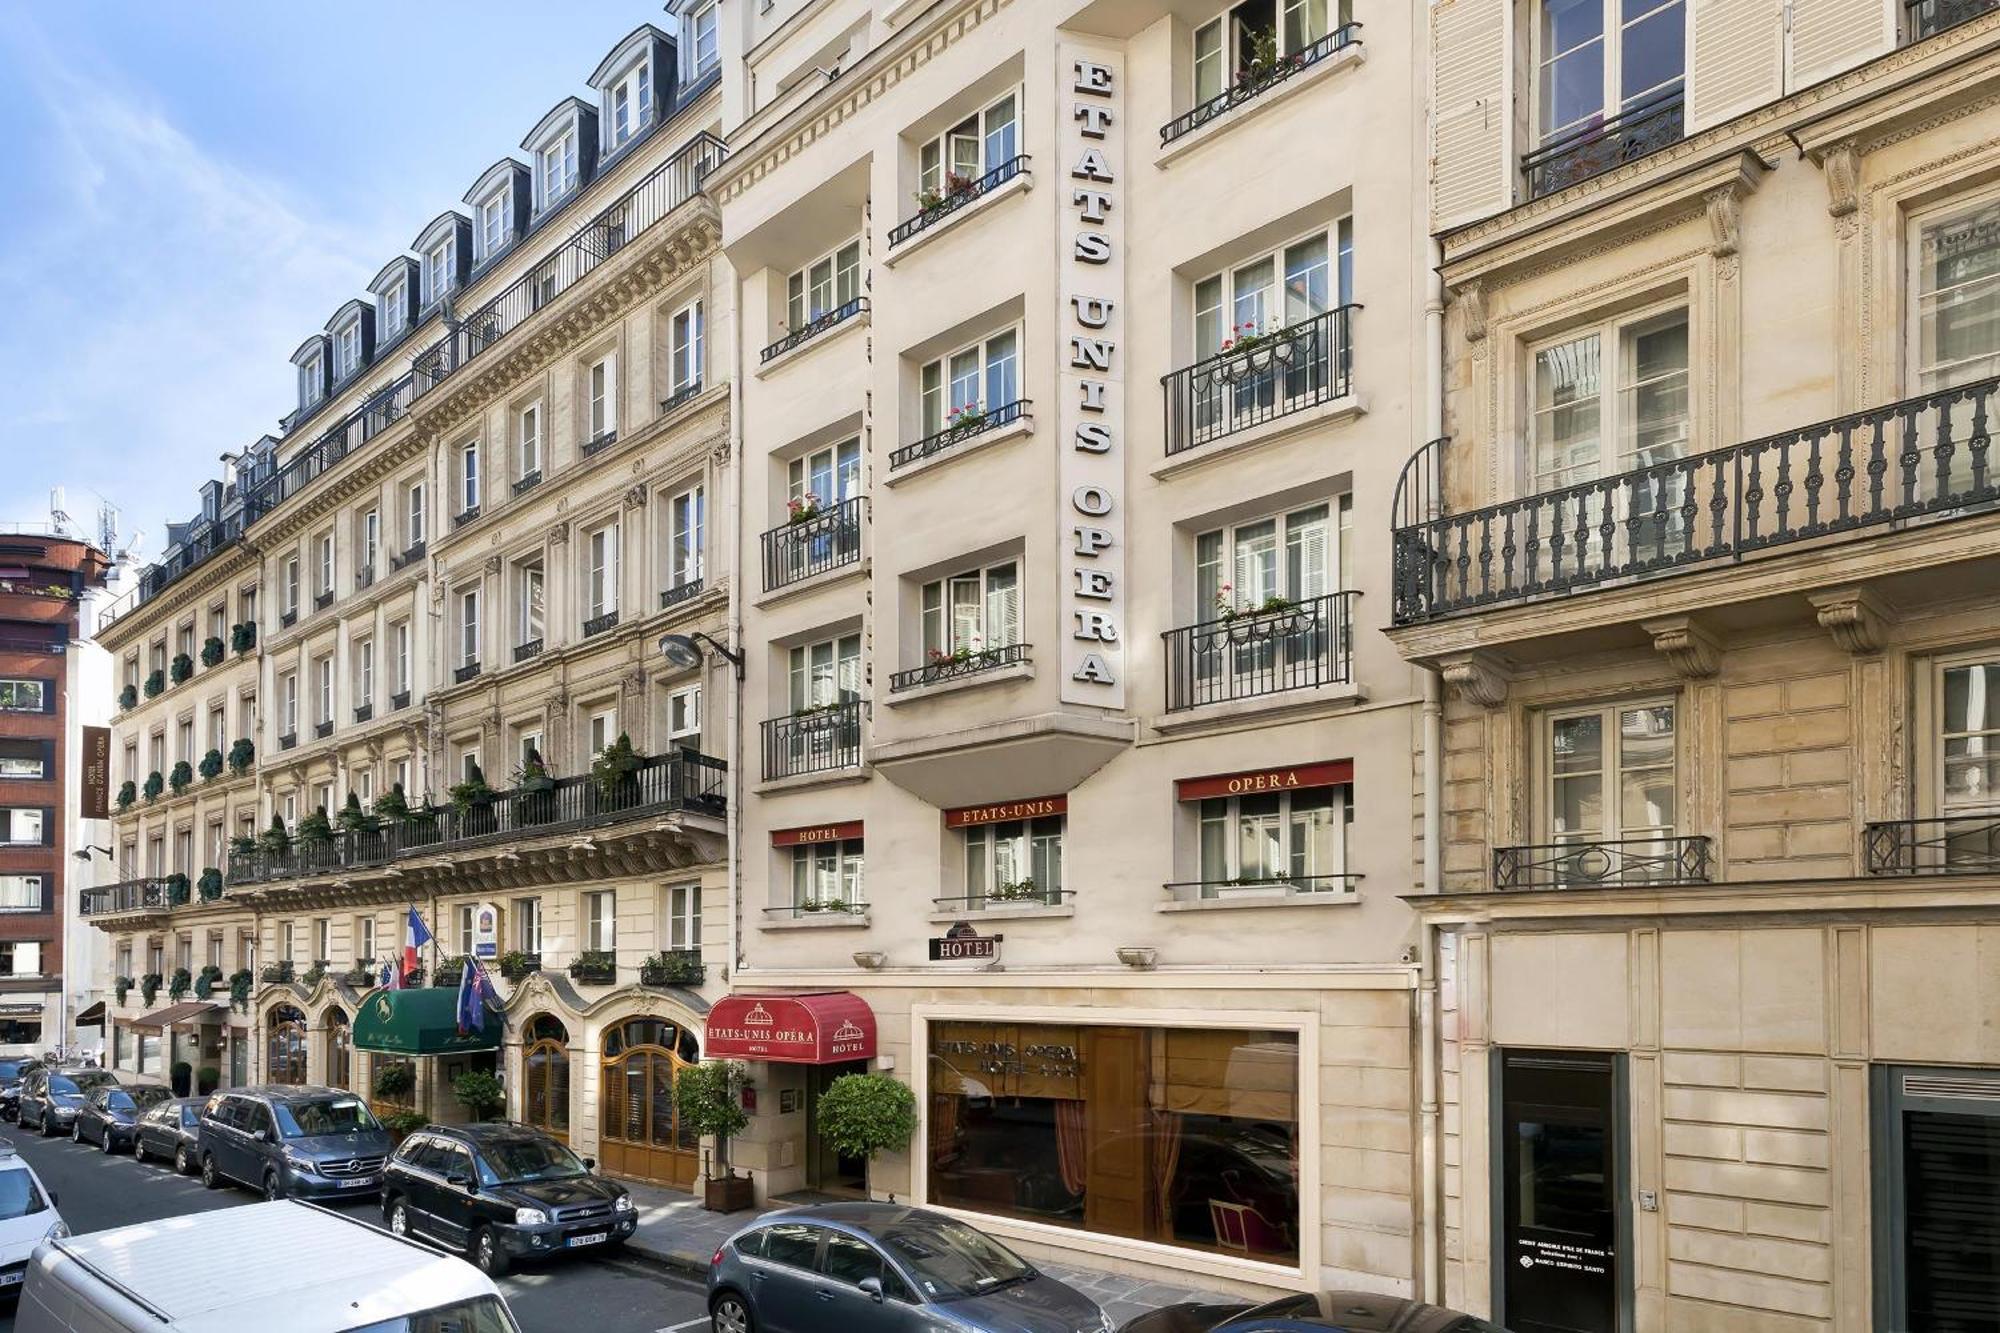 Hotel Etats Unis Opera Paris Ngoại thất bức ảnh